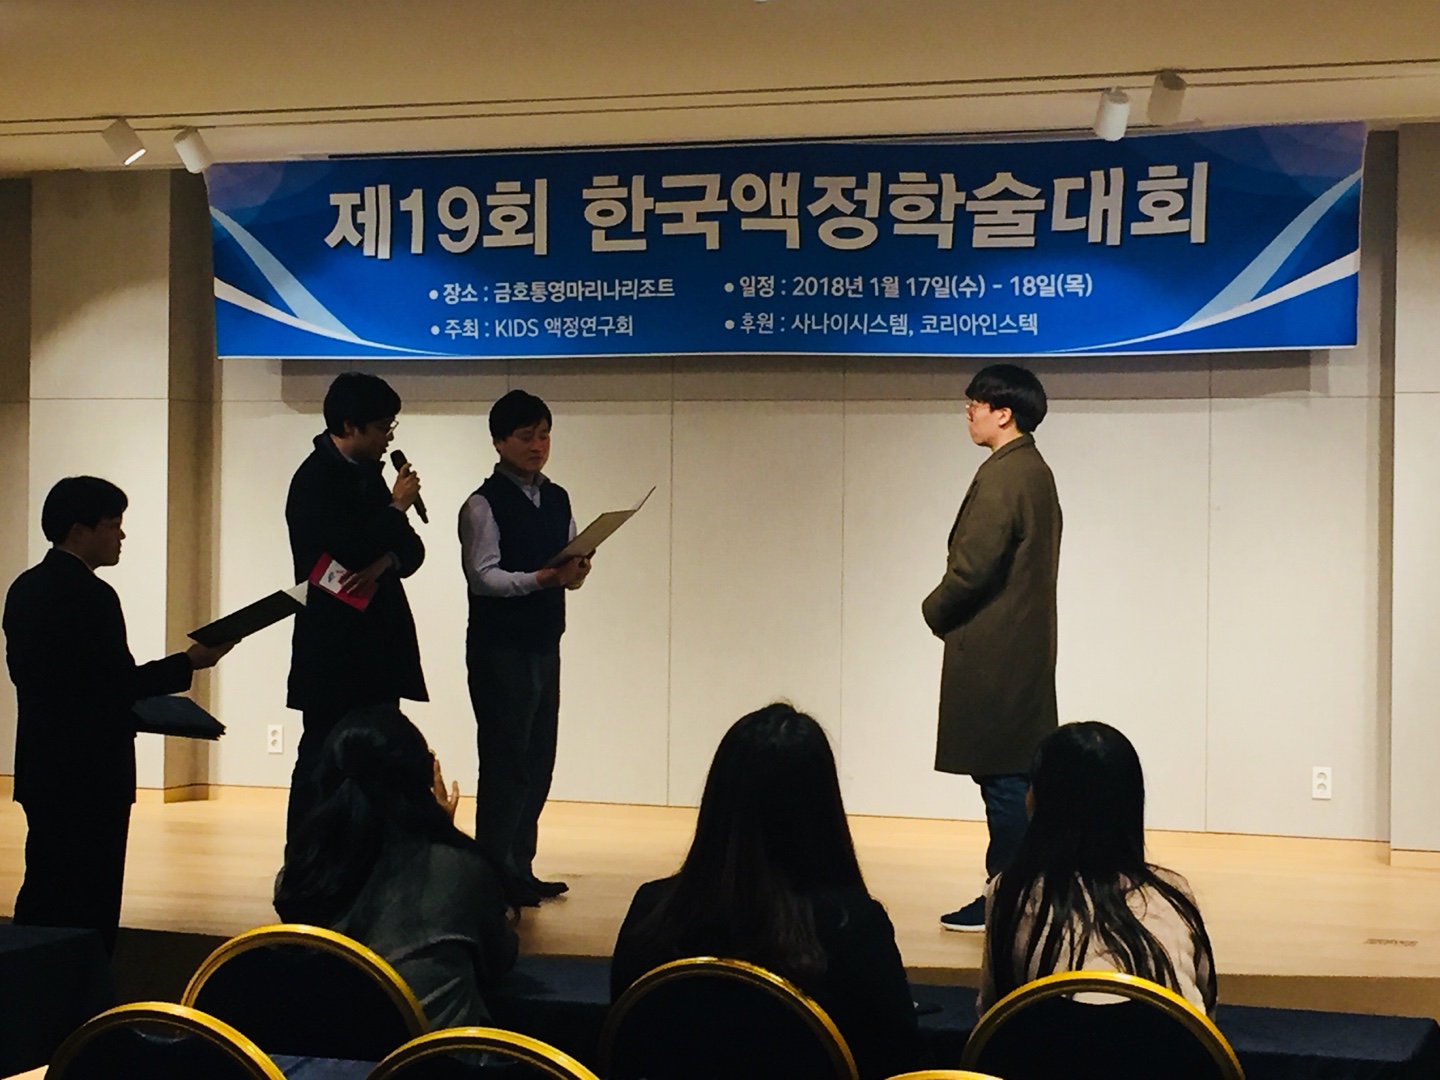 2018. 01. 17. - 2018. 01. 18. The 19th Korea Liquid Crystal Conference (KLCC)